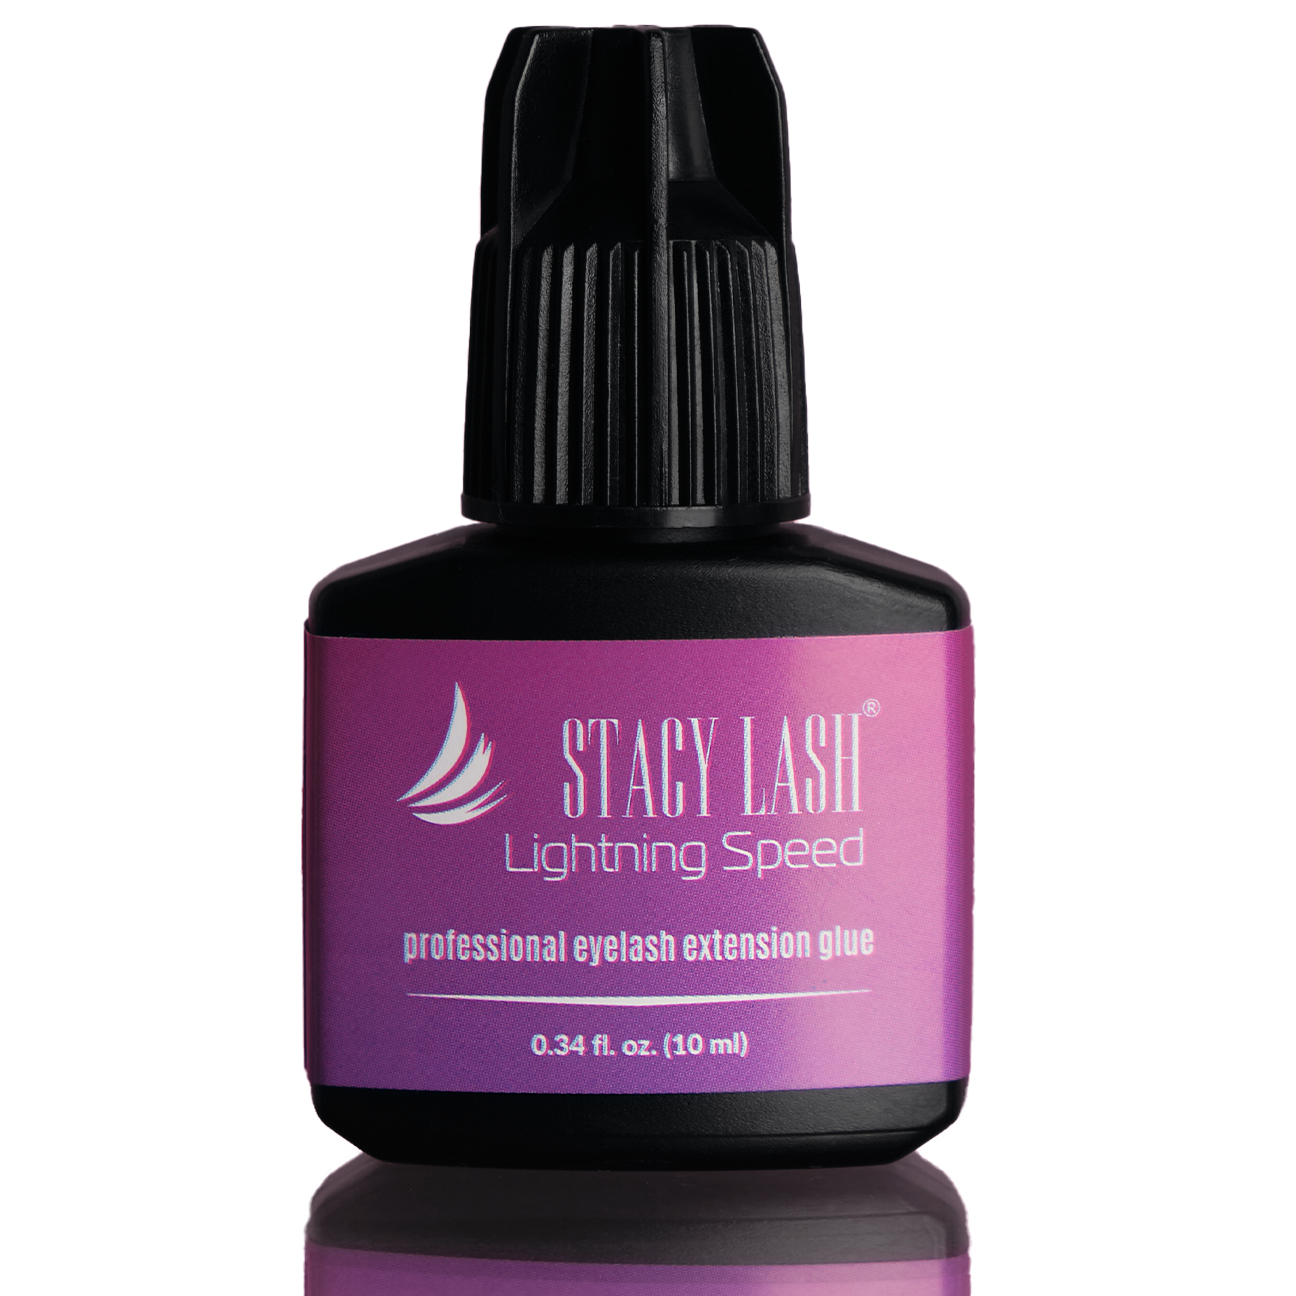 Stacy Lash Lightning Speed Eyelash Extensions Glue - 10ml